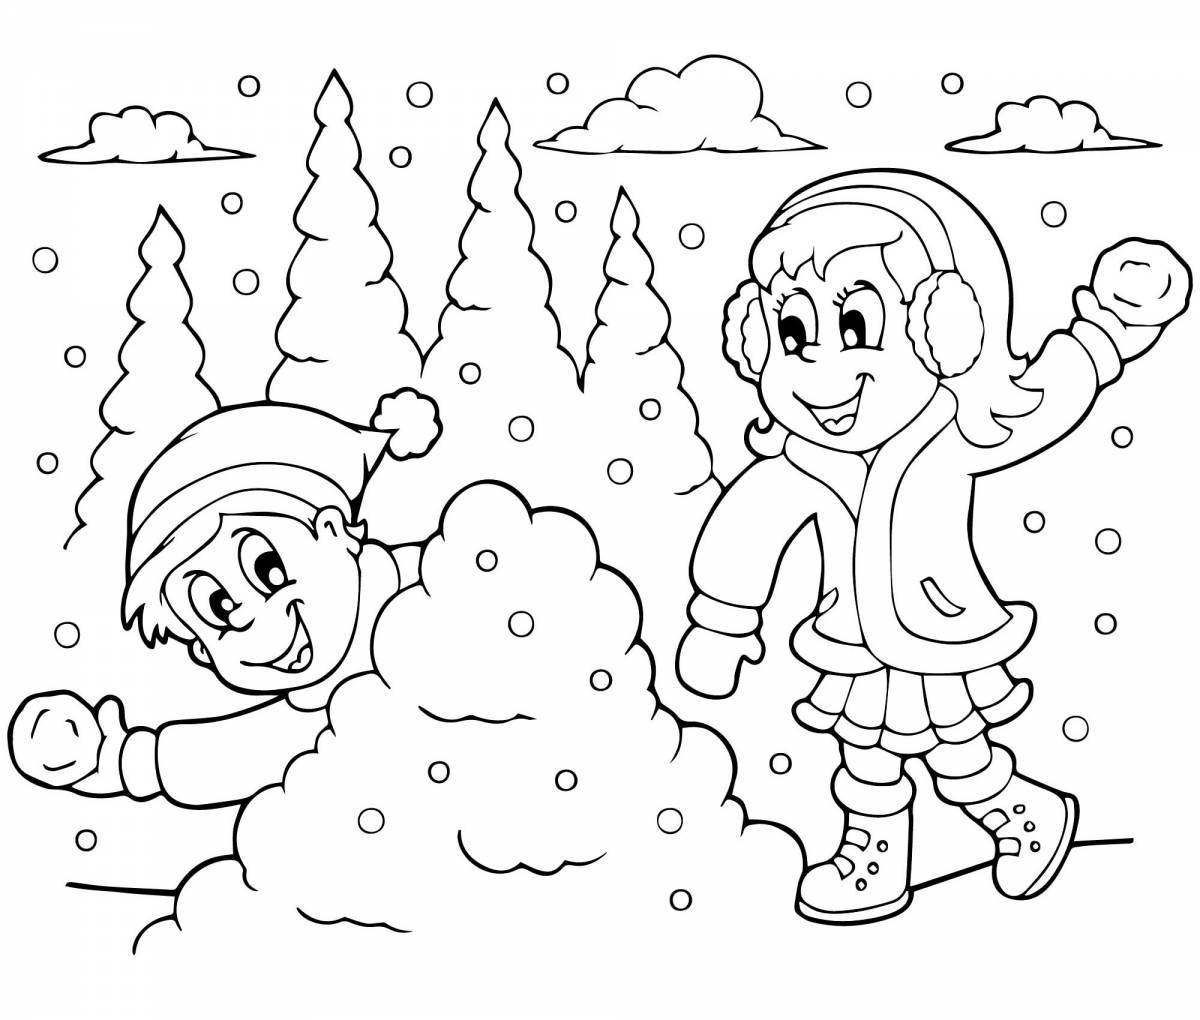 Coloring book snowy winter